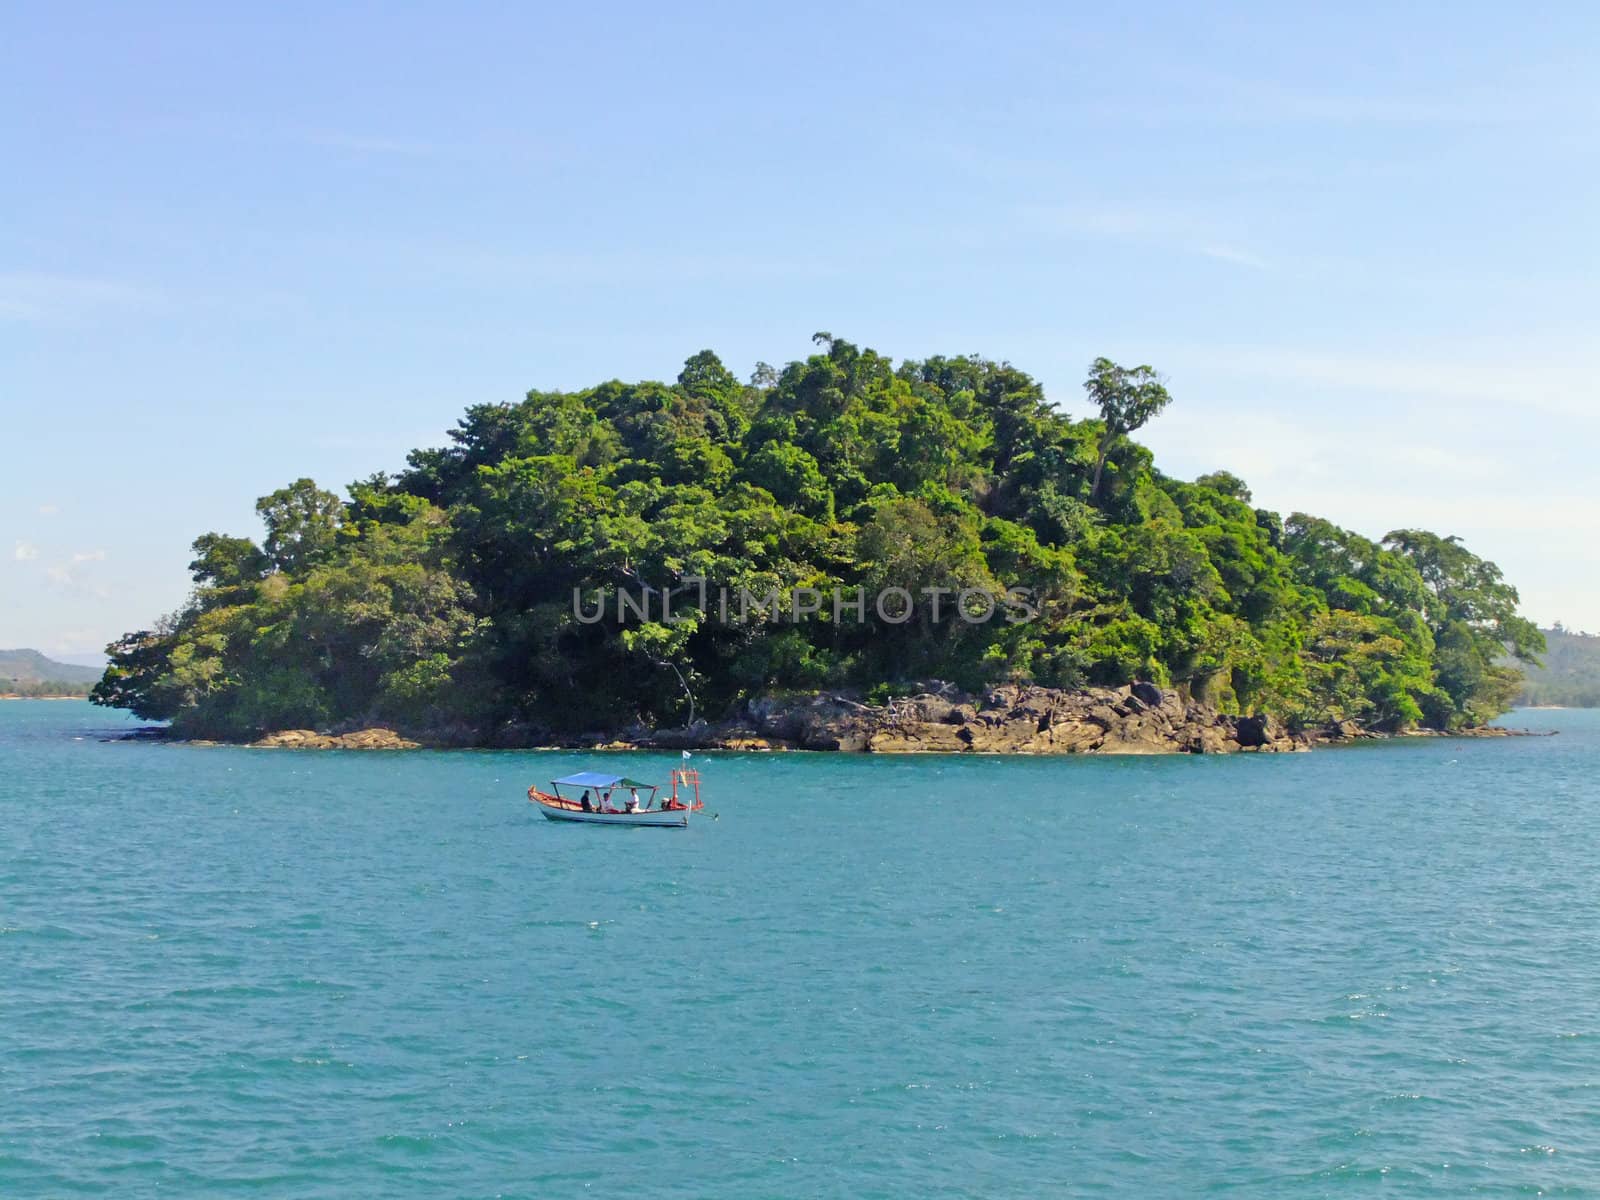 Small island off the coast of Sihanoukville, Cambodia by donya_nedomam